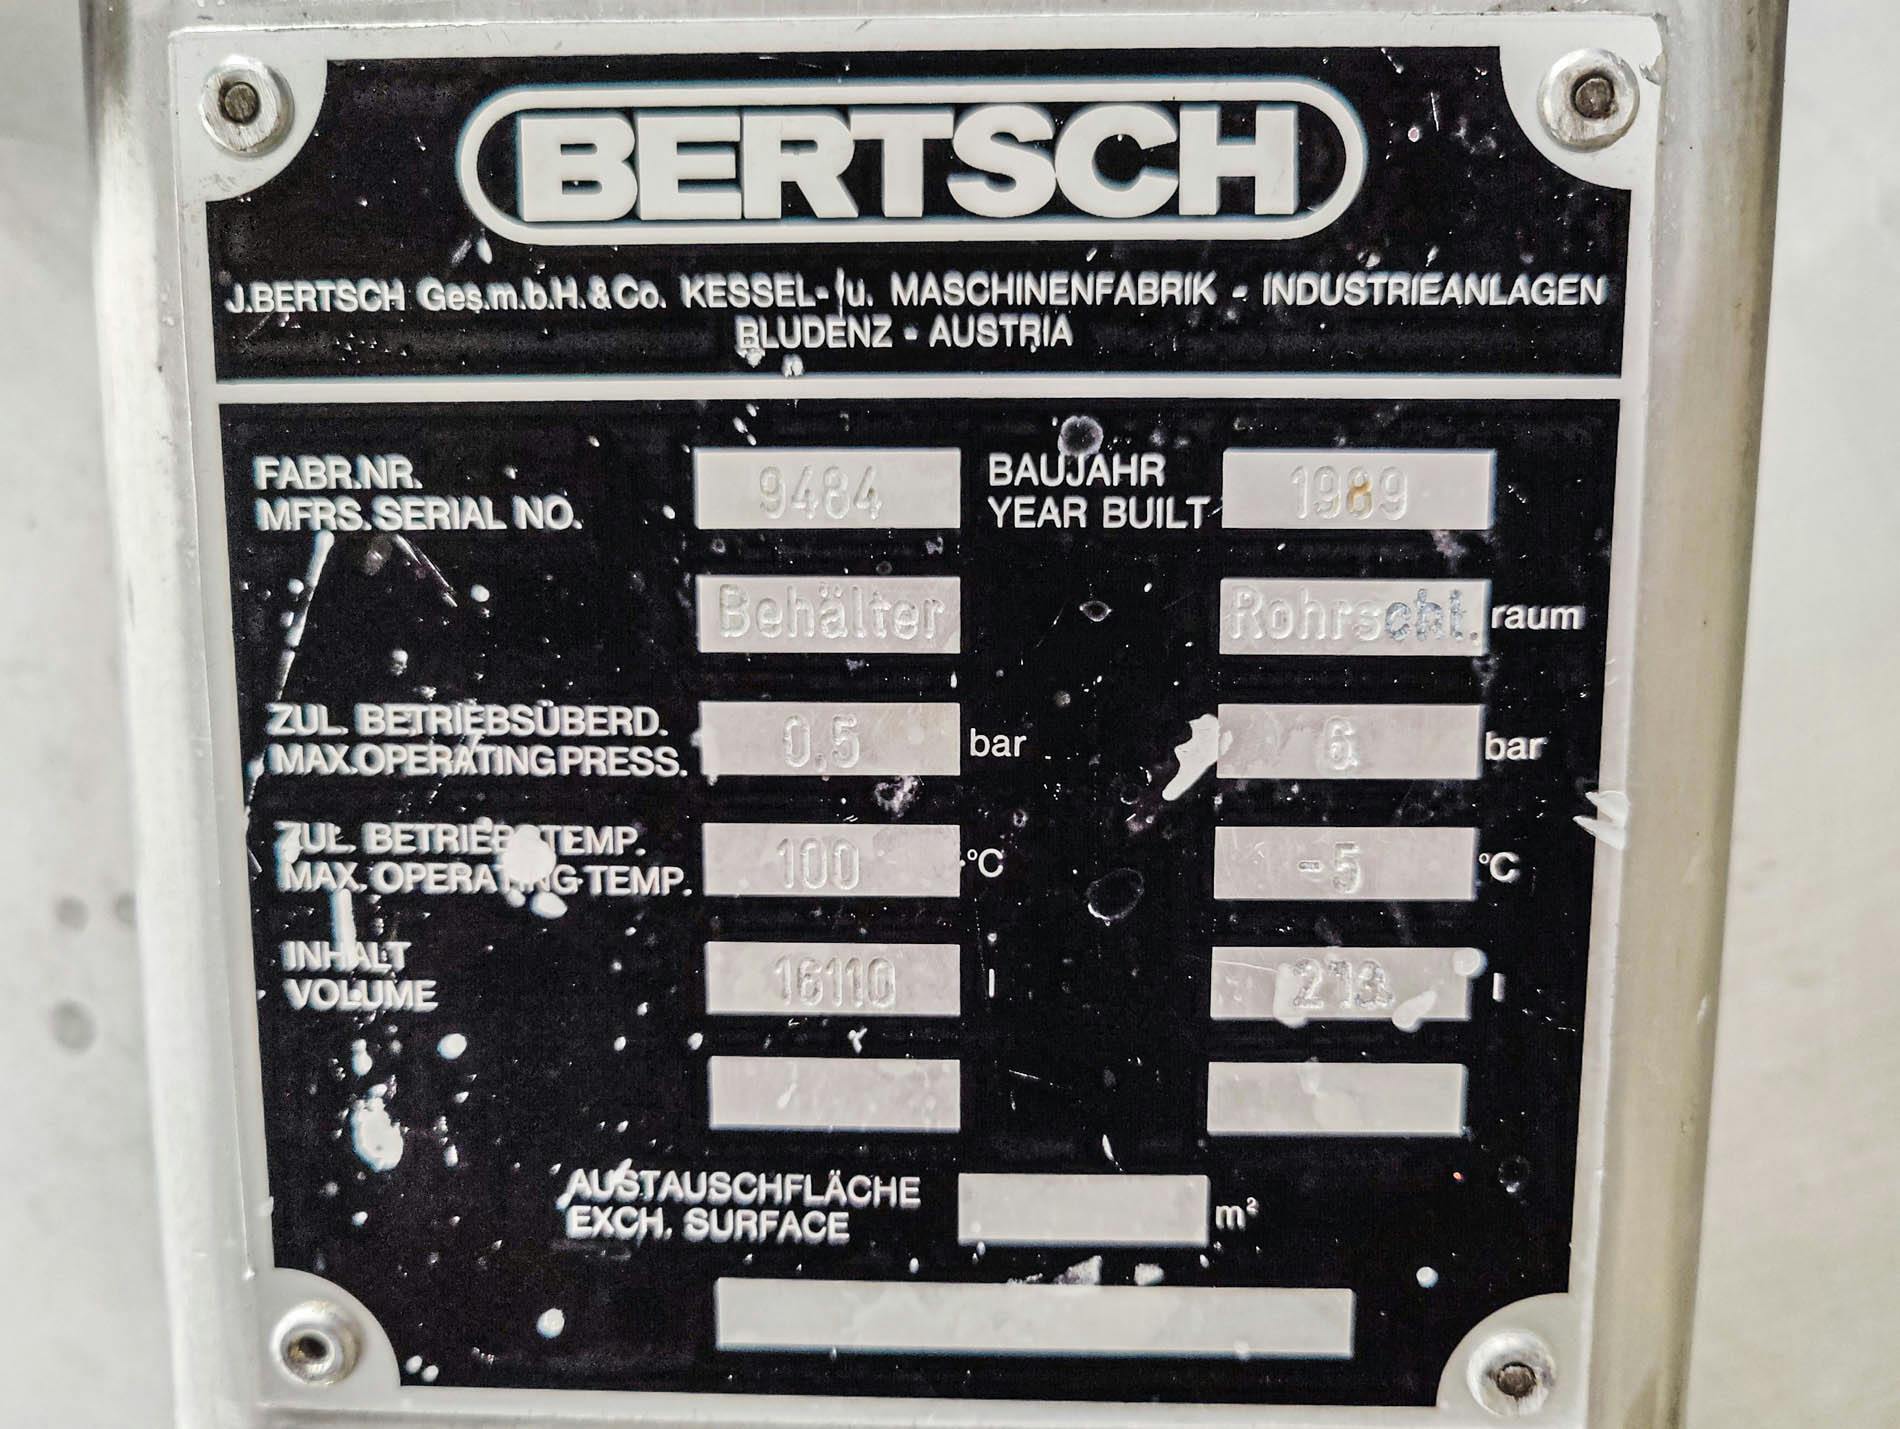 Bertsch 12500 Ltr. - Bioreactor - Stainless Steel Reactor - image 15